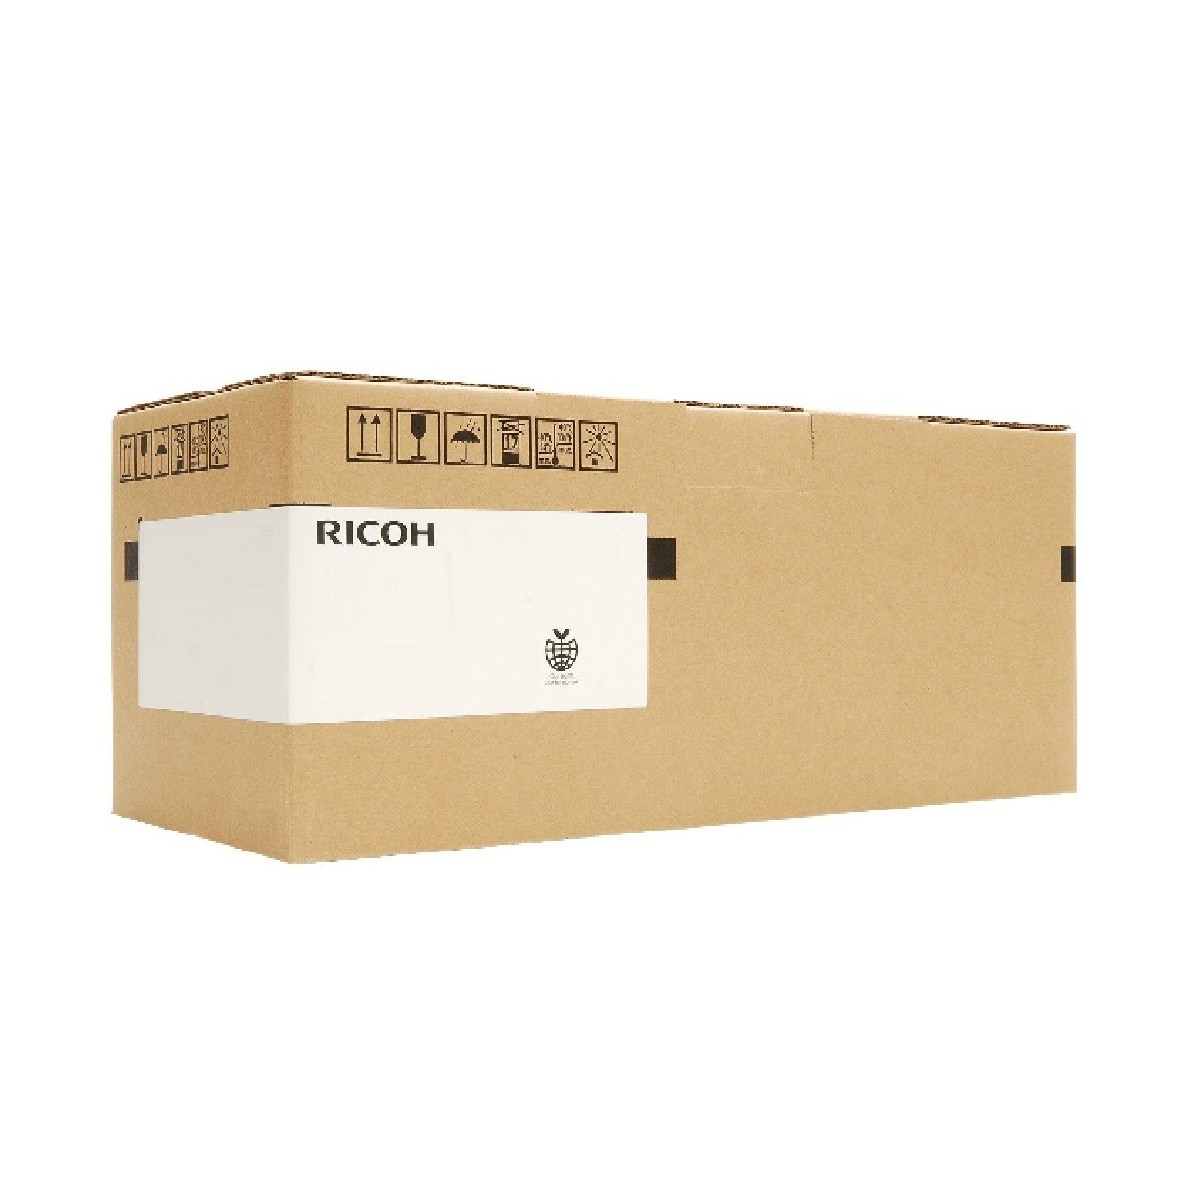 Ricoh B1803001 - 60000 pages - Black - Ricoh - Aficio 3228C Aficio 3235C Aficio 3228C SPF Aficio 3235C SPF